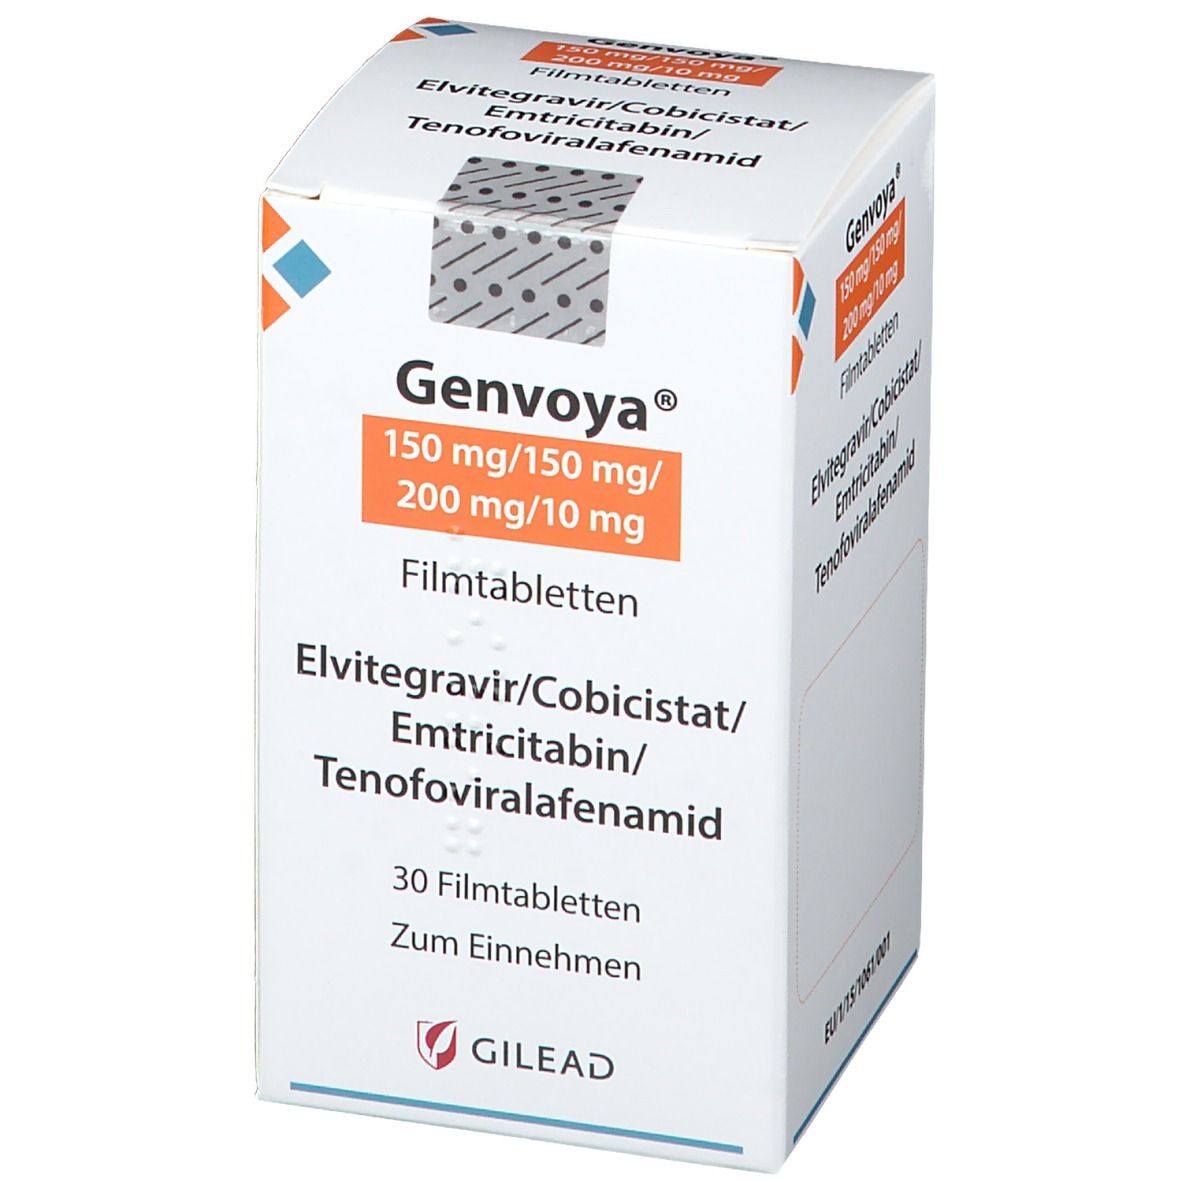 Genvoya® 150 mg/150 mg/200 mg/10 mg